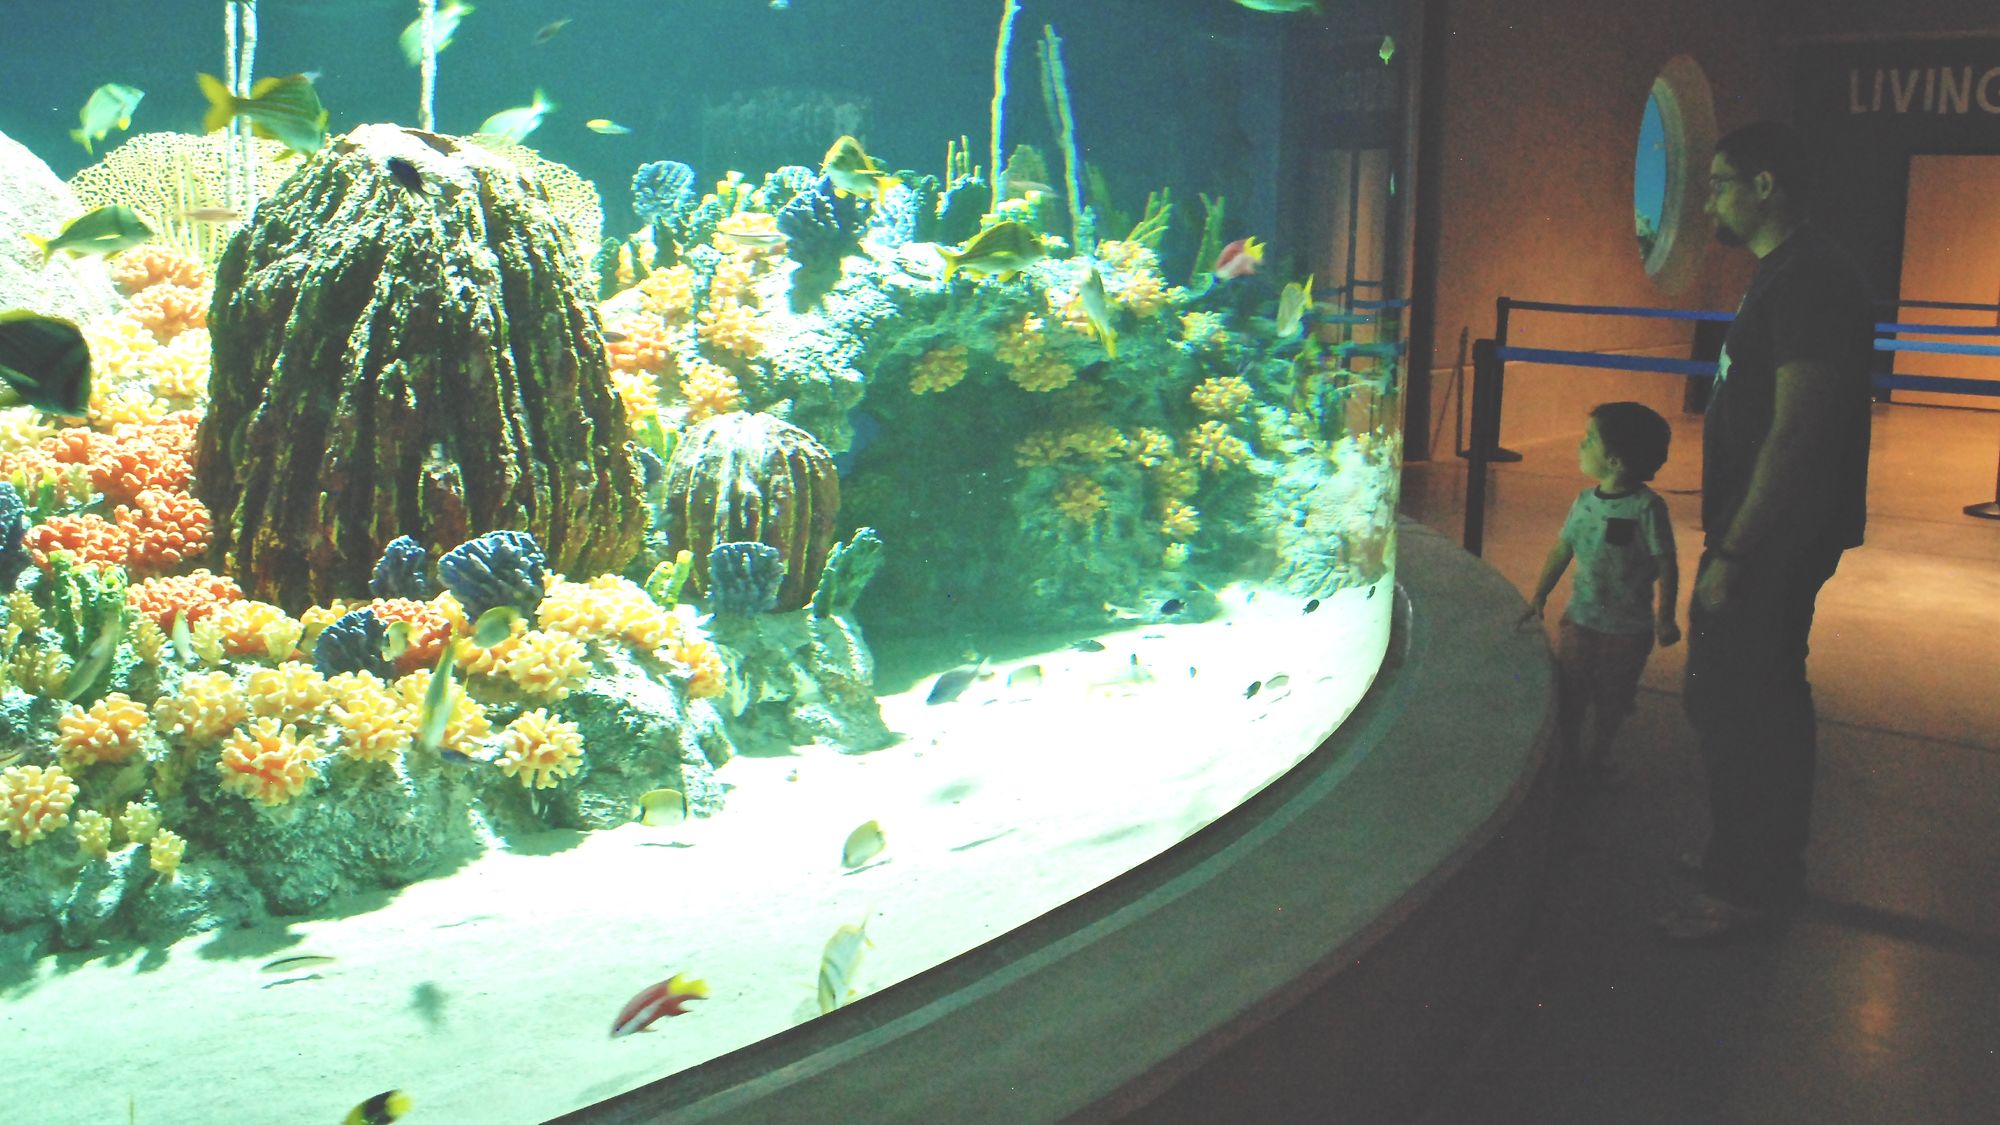 Reasons to Love the Odysea Aquarium